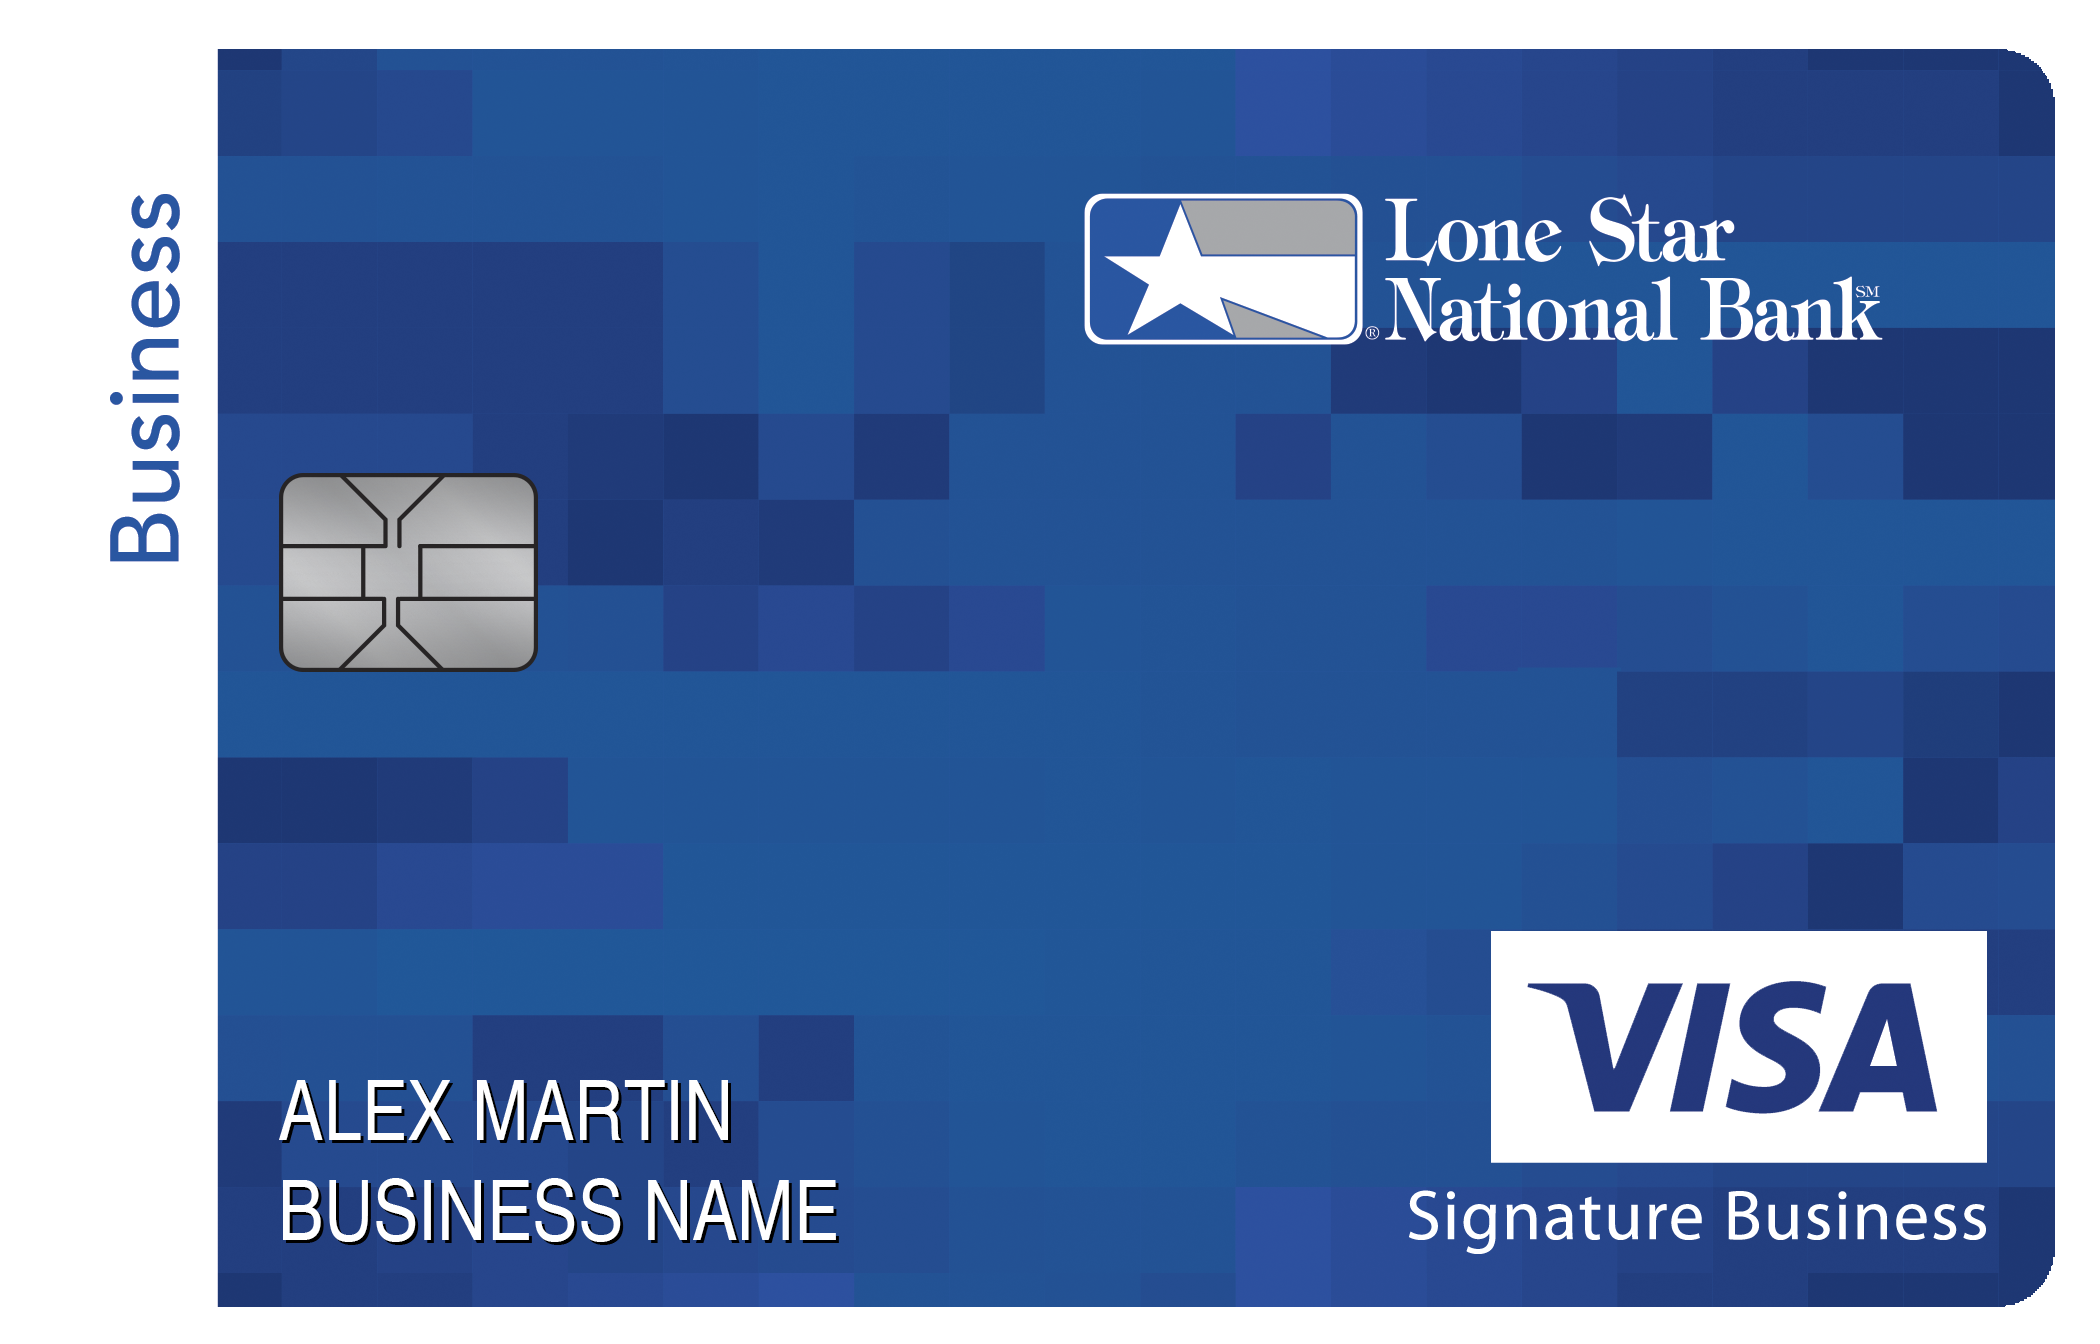 Lone Star National Bank Smart Business Rewards Card